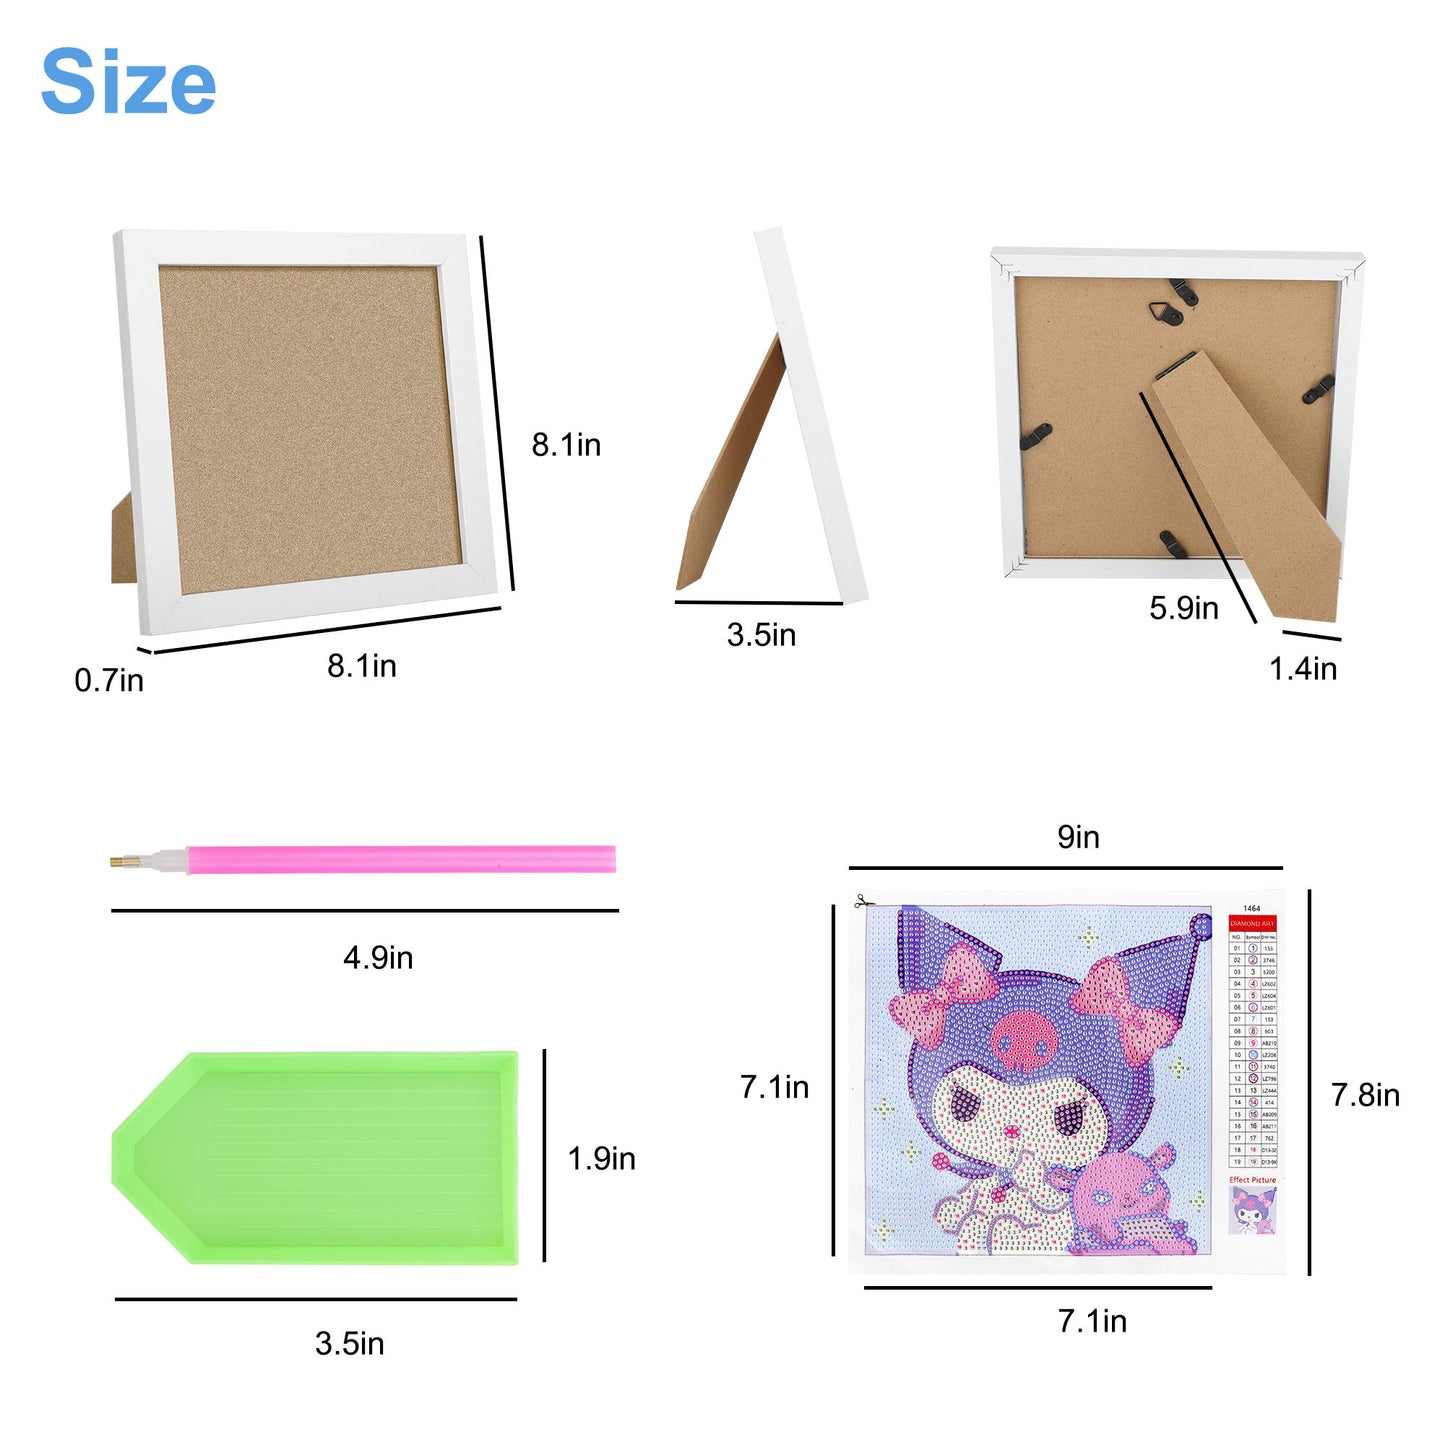 5D Diamond Painting Kit - 9in DIY Diamond Art Kits for Beginners, Adults & Kids Small Diamond Painting Craft Supplies